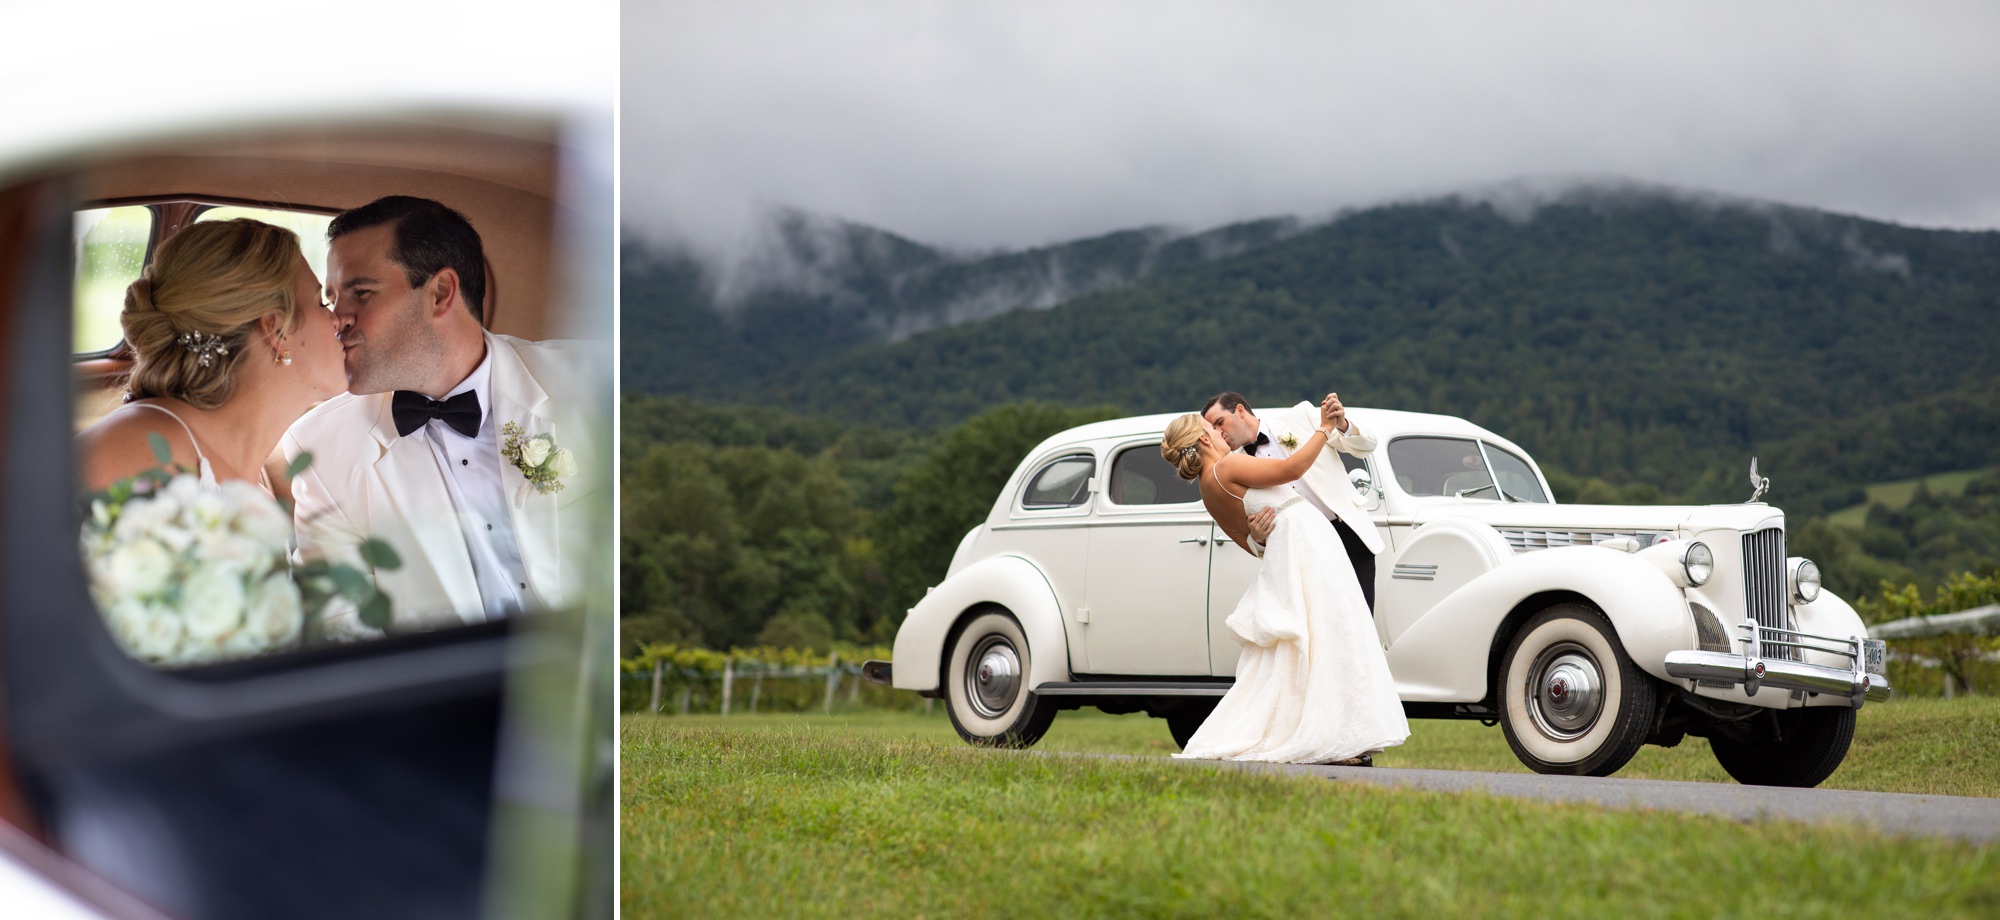 Best Veritas Winery and Vineyards Wedding Photographers